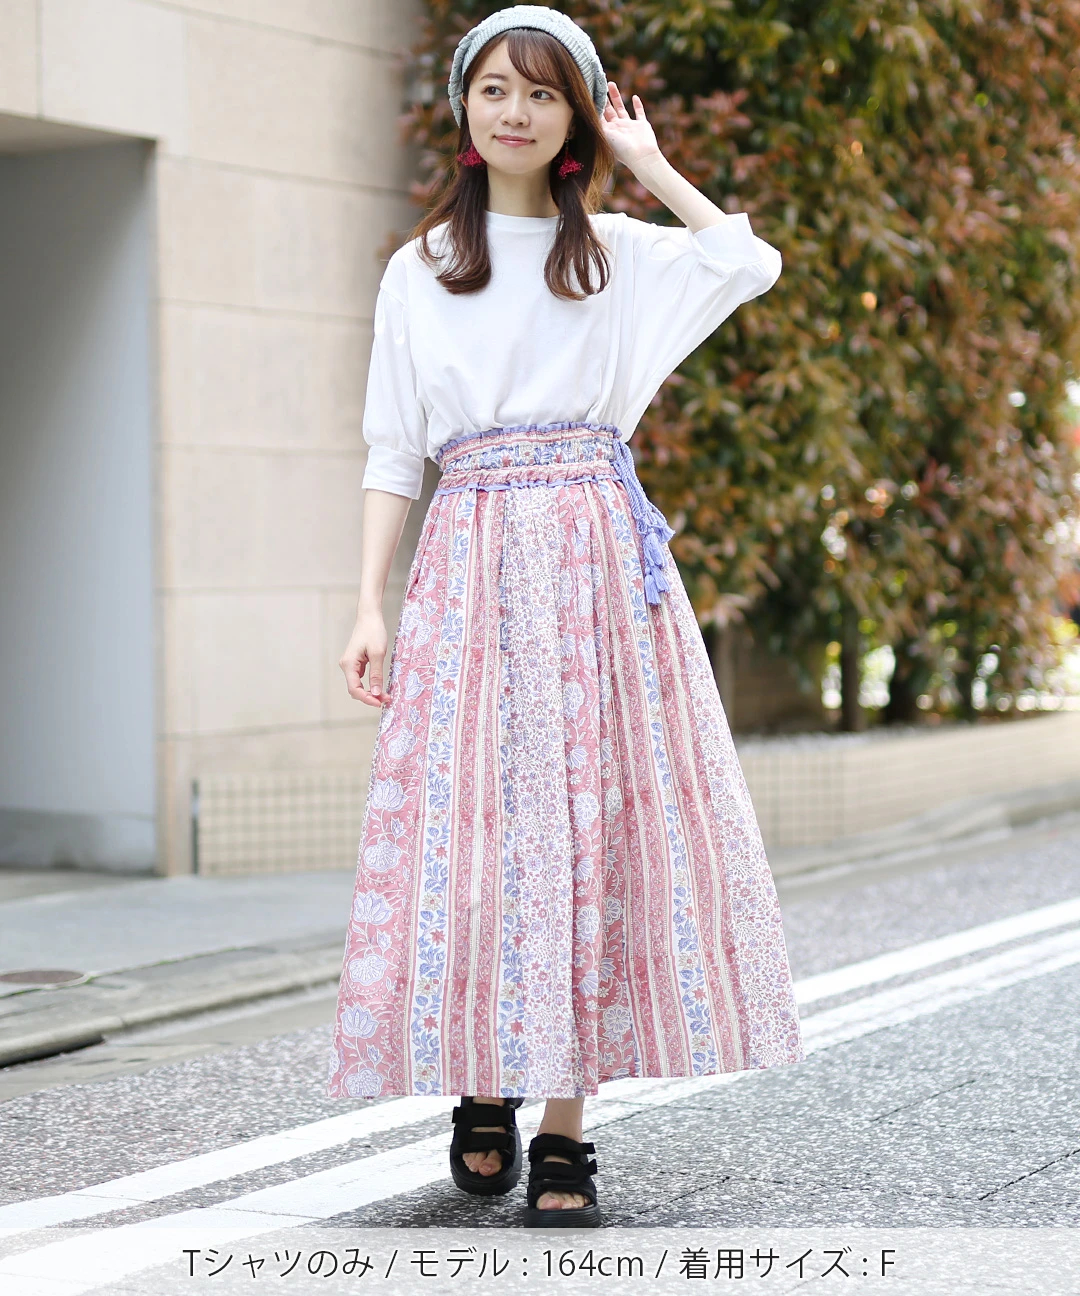 earth 定価5489円 カットワーク刺繍スカート - スカート